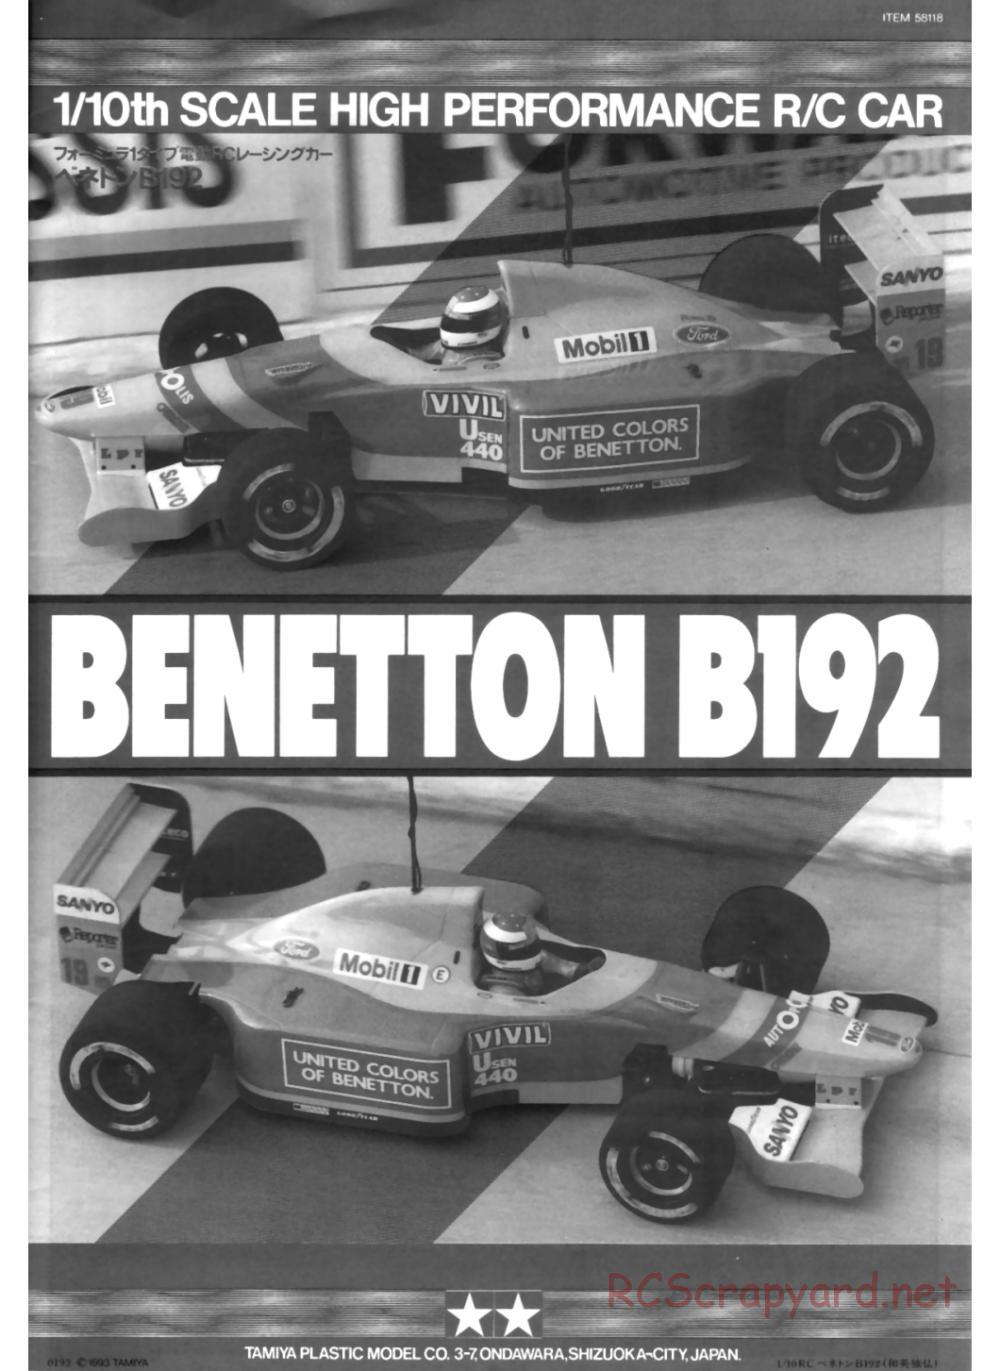 Tamiya - Benetton B192 - F102 Chassis - Manual - Page 1